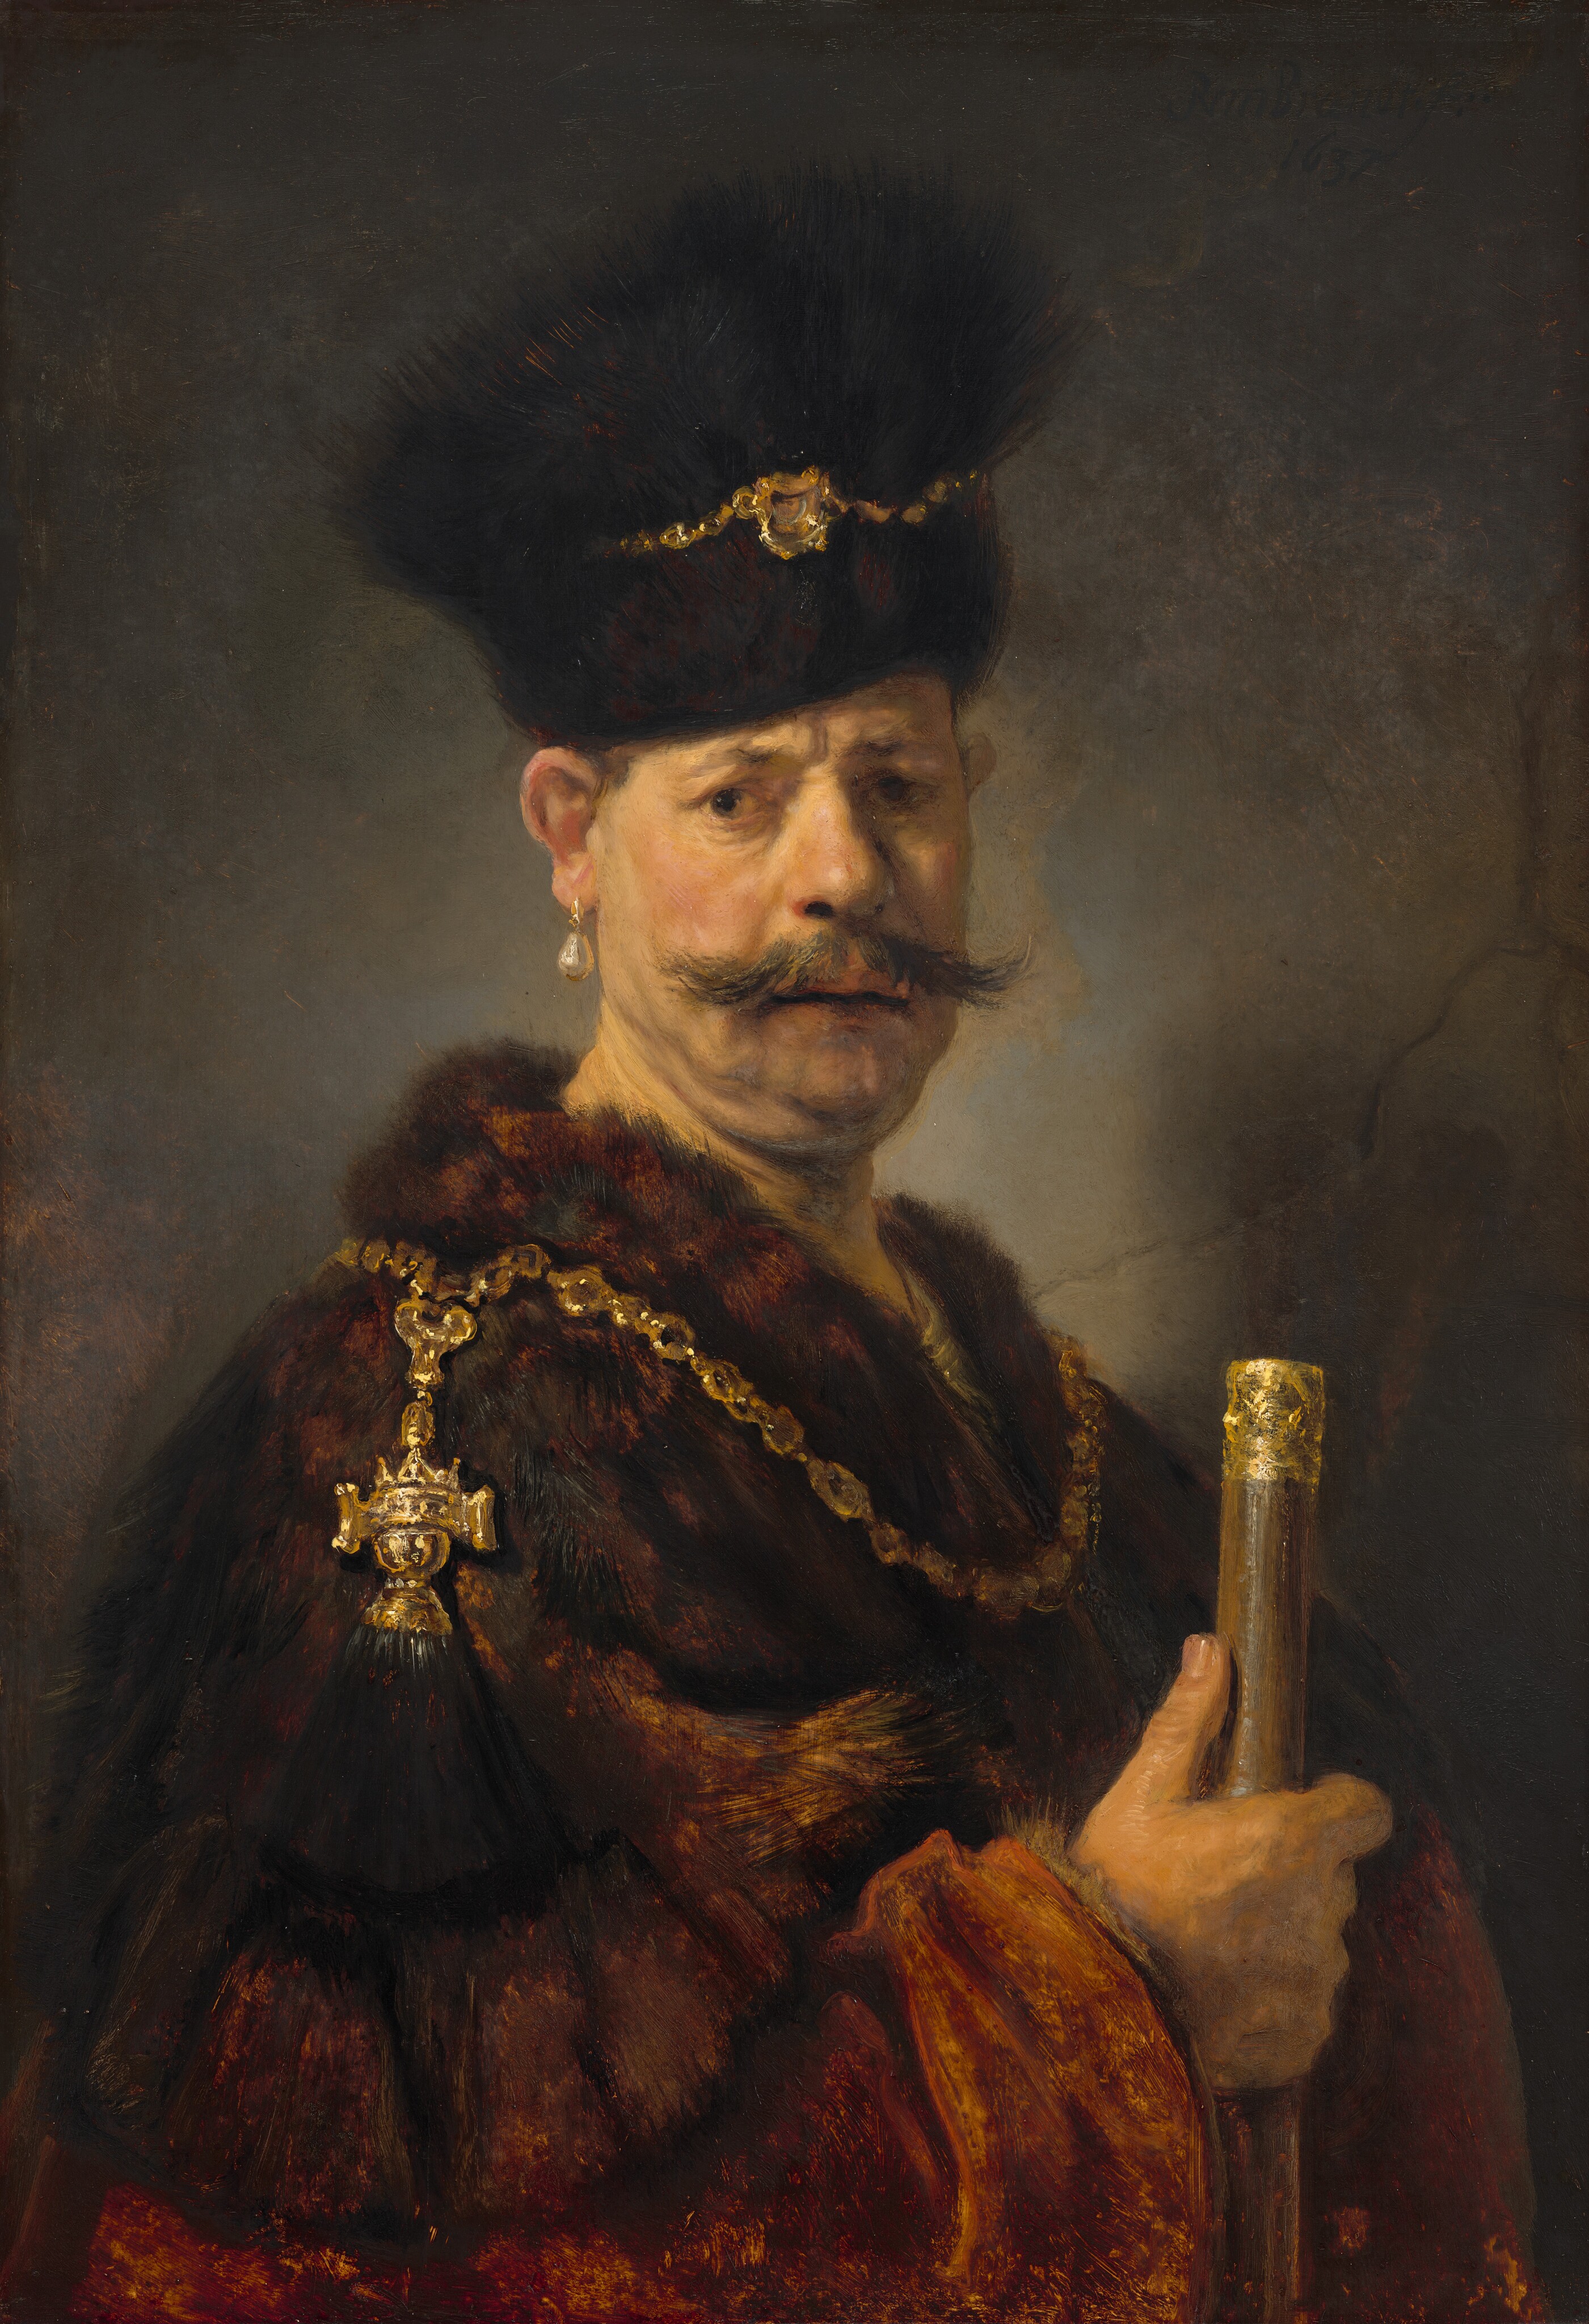 波蘭貴族 by Rembrandt van Rijn - 1637 - 96.8 x 66 cm 